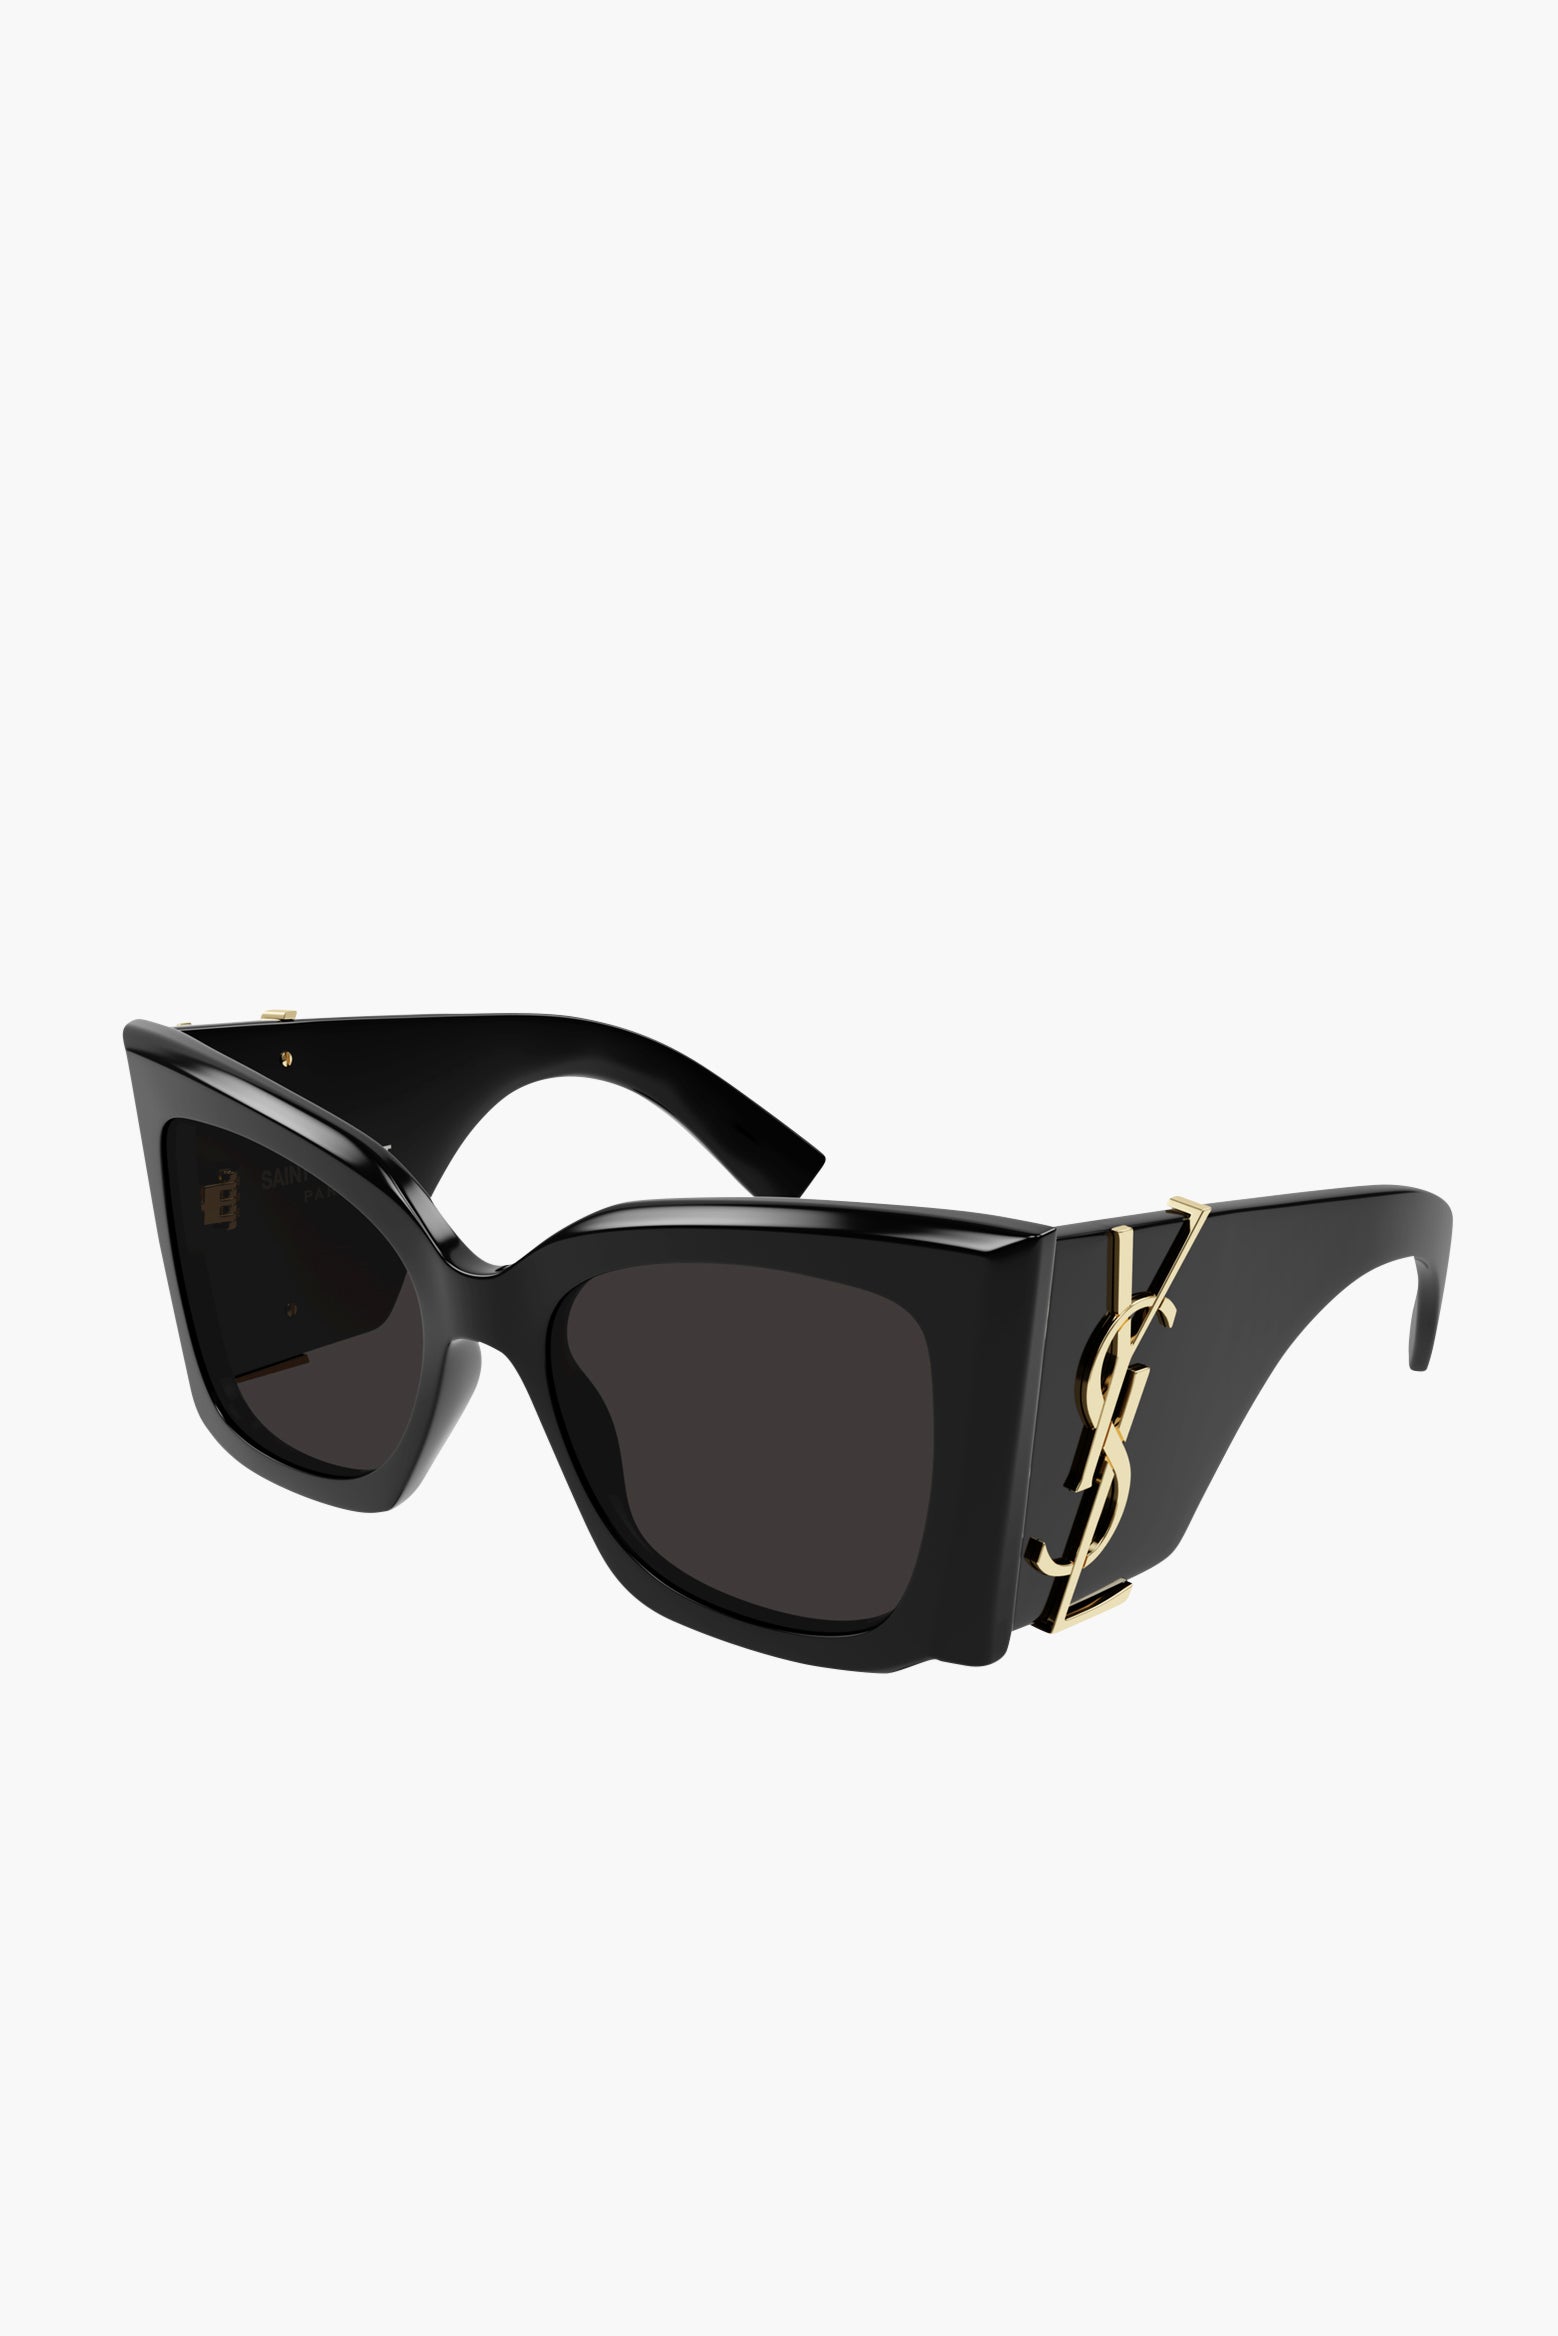 Saint Laurent Blaze Oversized Sunglasses in Black available at TNT The New Trend Australia.